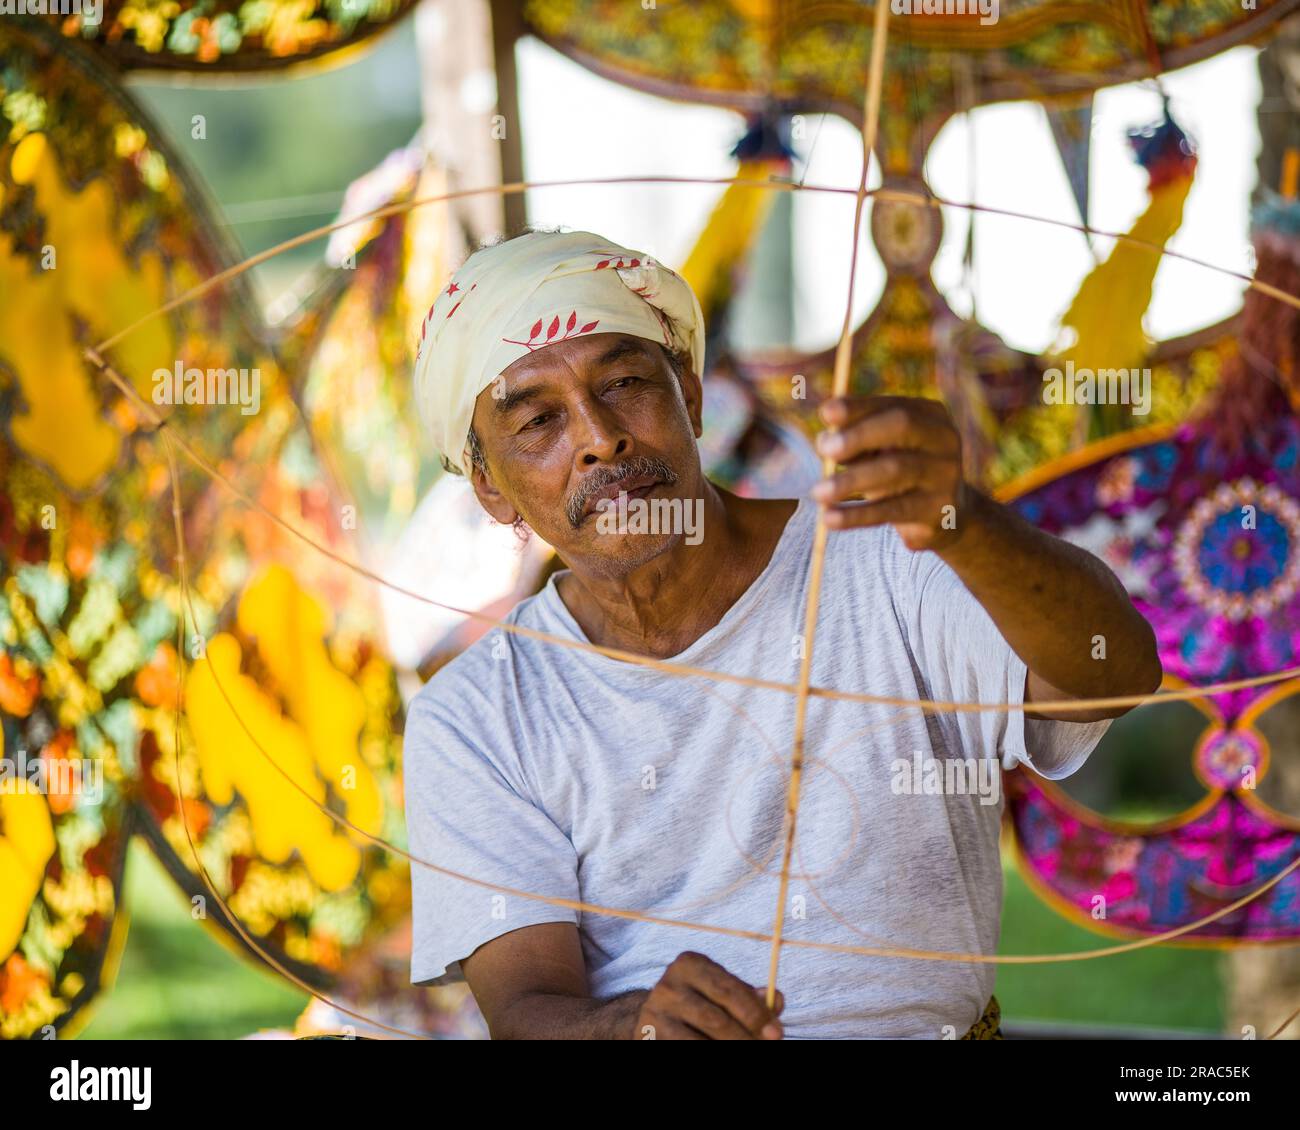 Terengganu tradisional kite or Wau maker Stock Photo